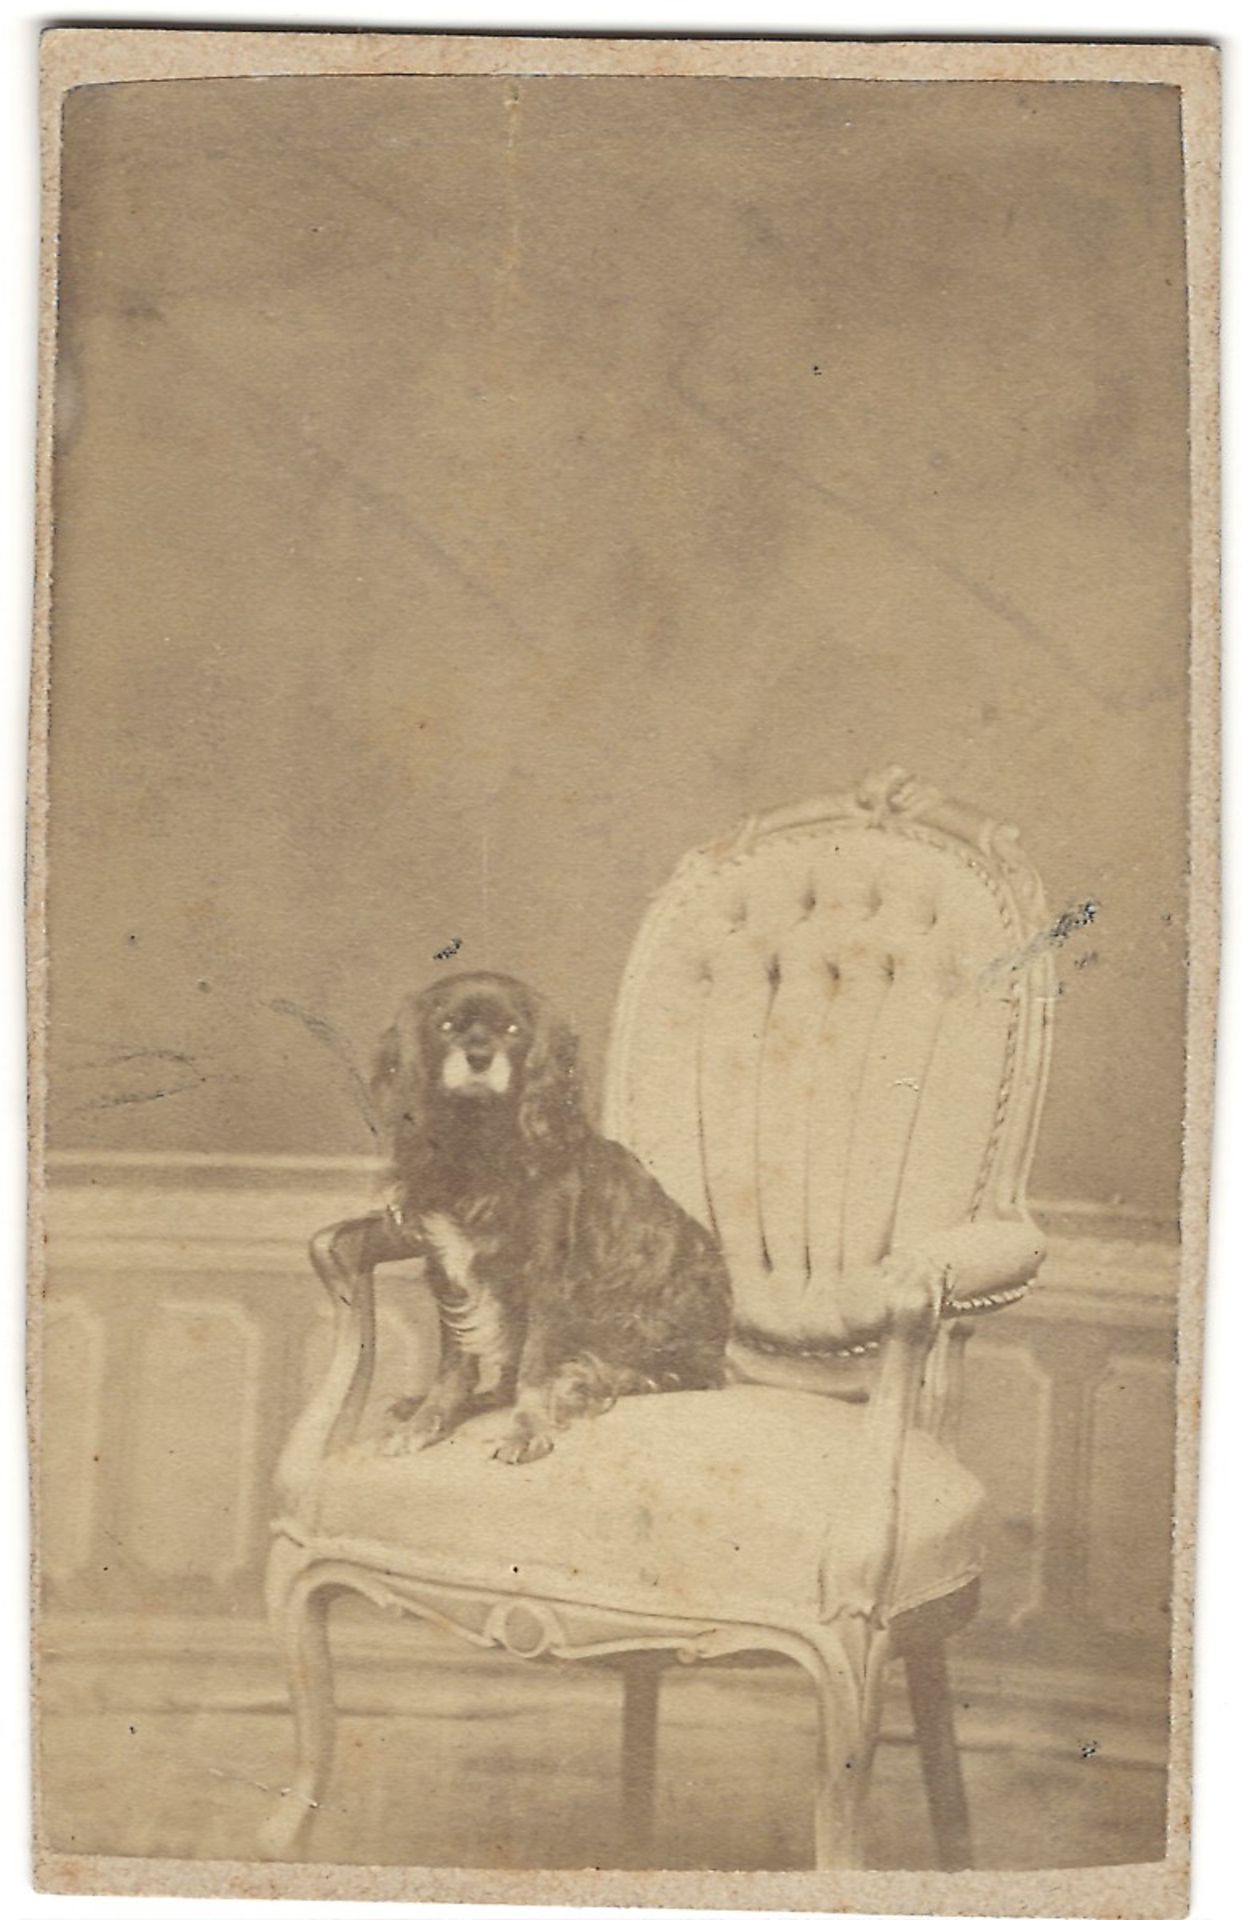 [Russian Empire]. A dog of Grand Duke Sergei Alexandrovich of Russia. Photoprint. [Late 19th century